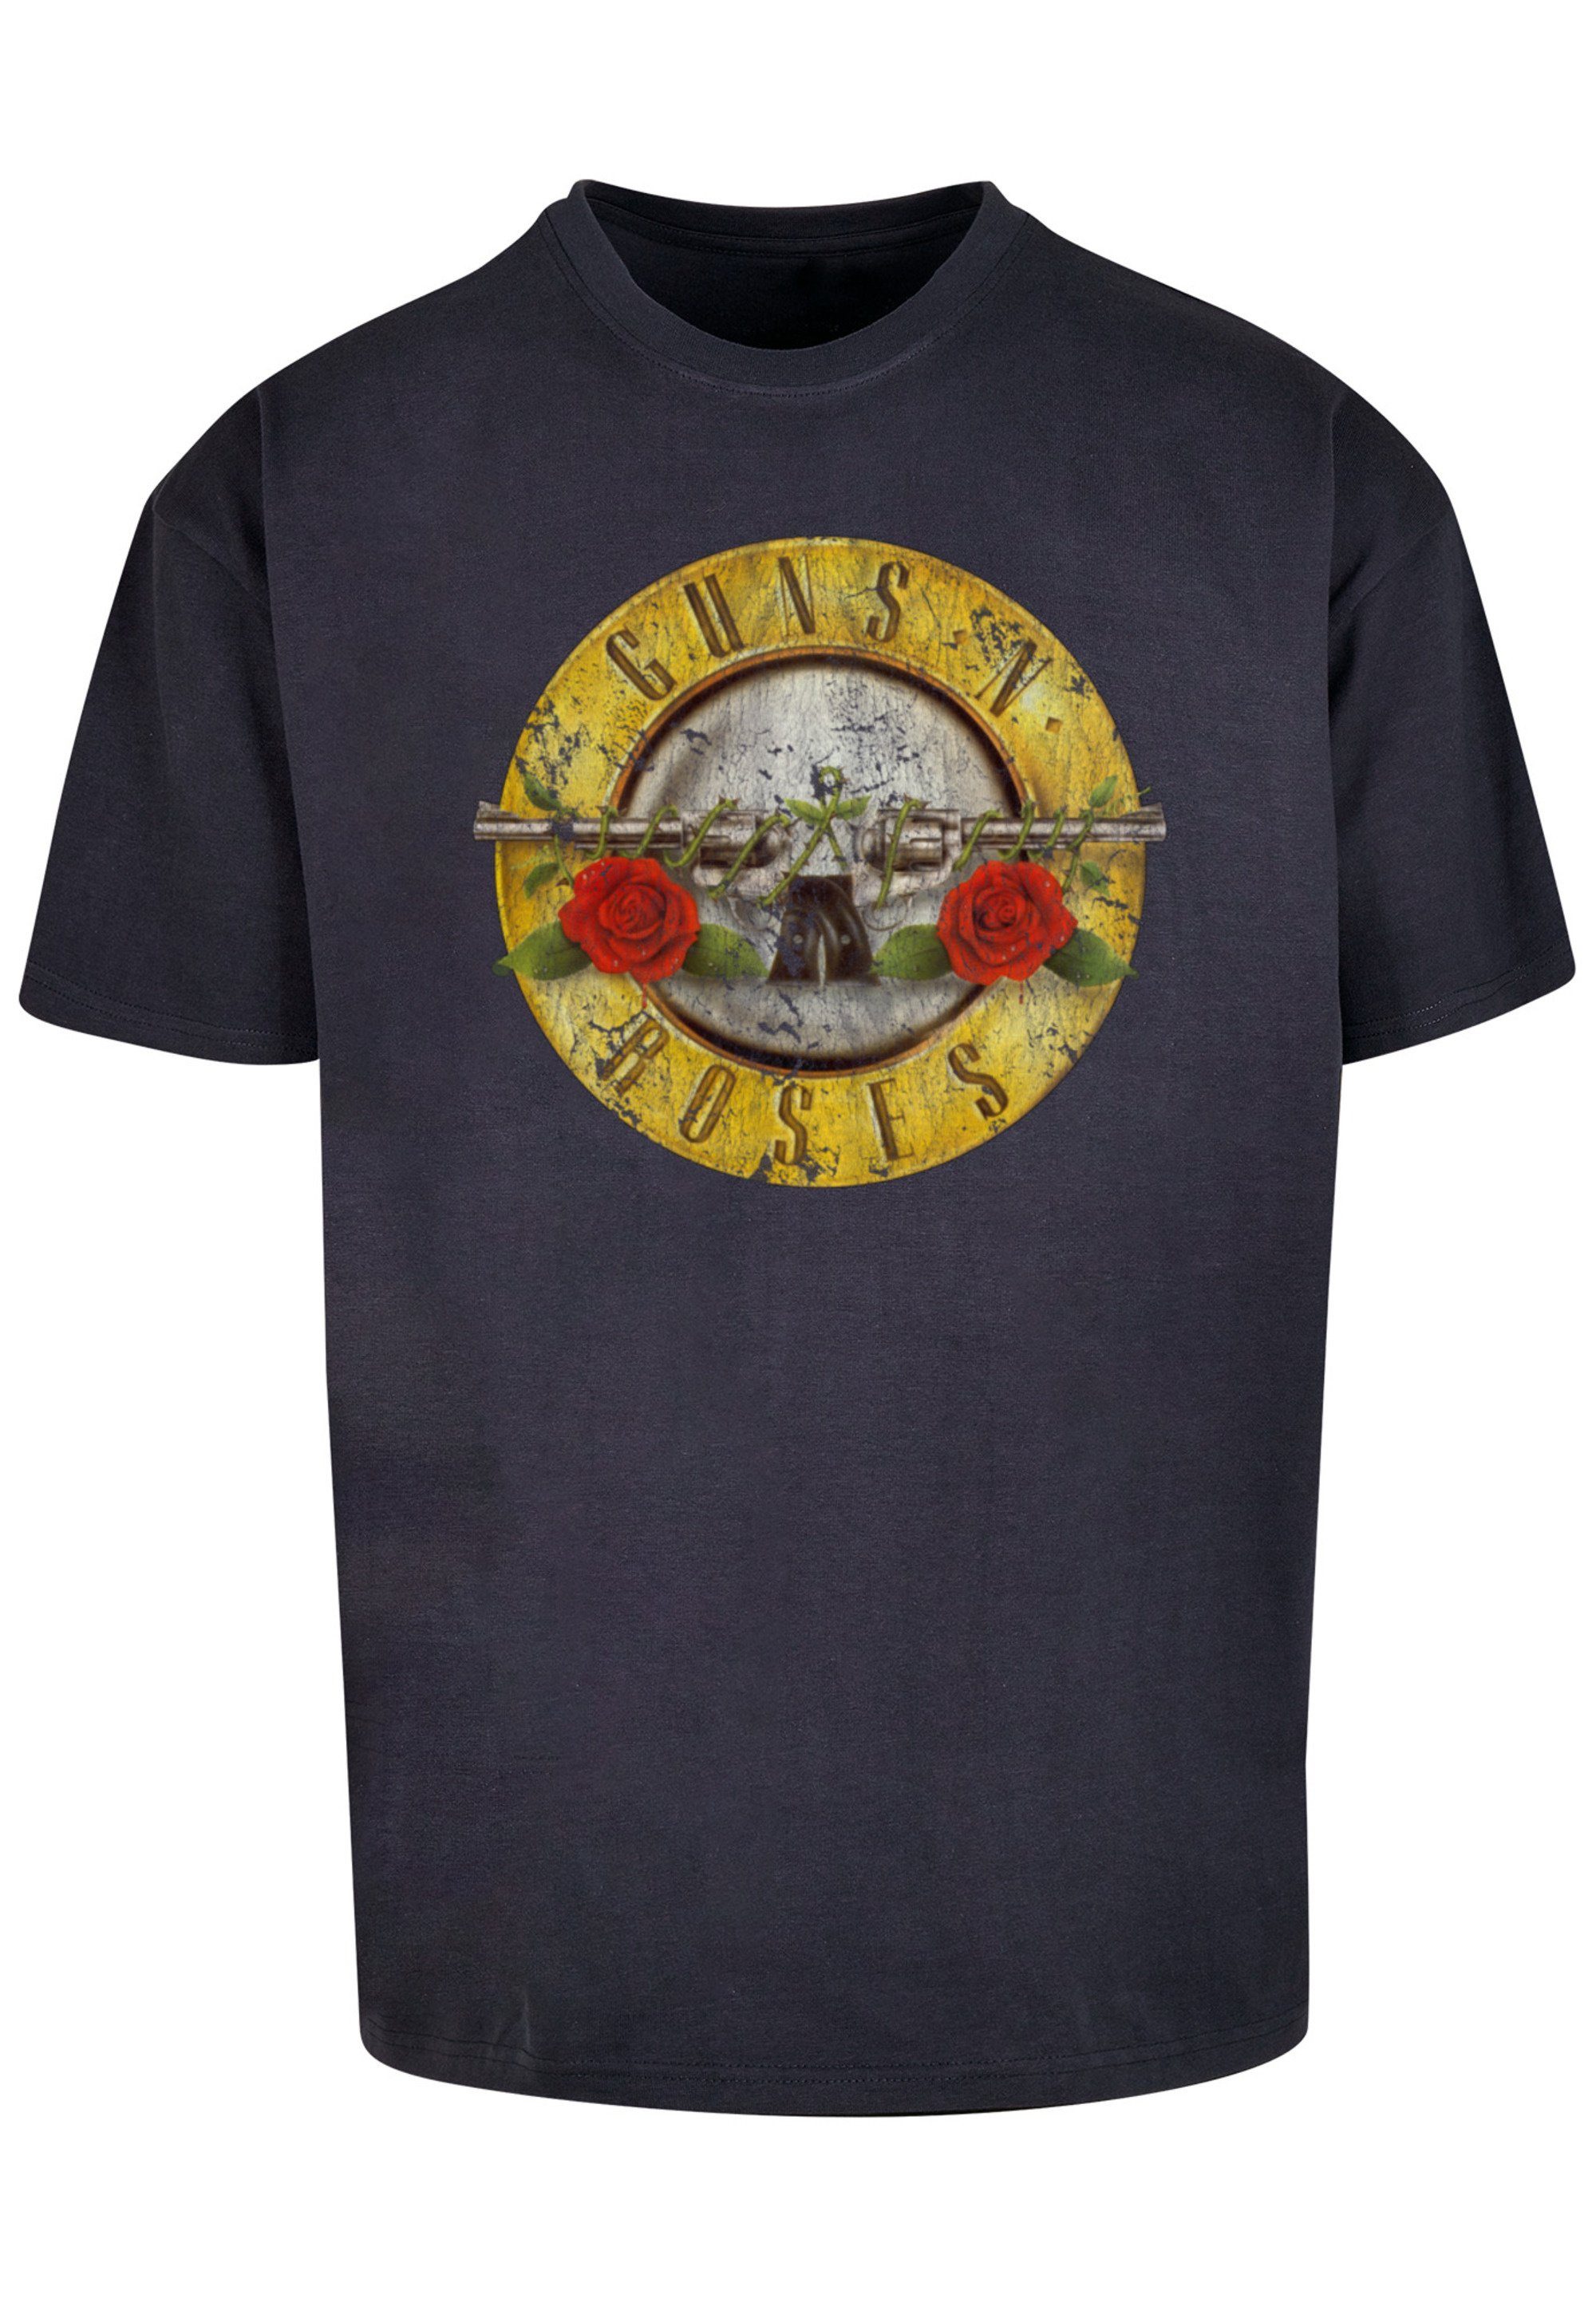 Classic T-Shirt navy Roses Logo 'n' Guns F4NT4STIC Black (Distressed) Band Vintage Print